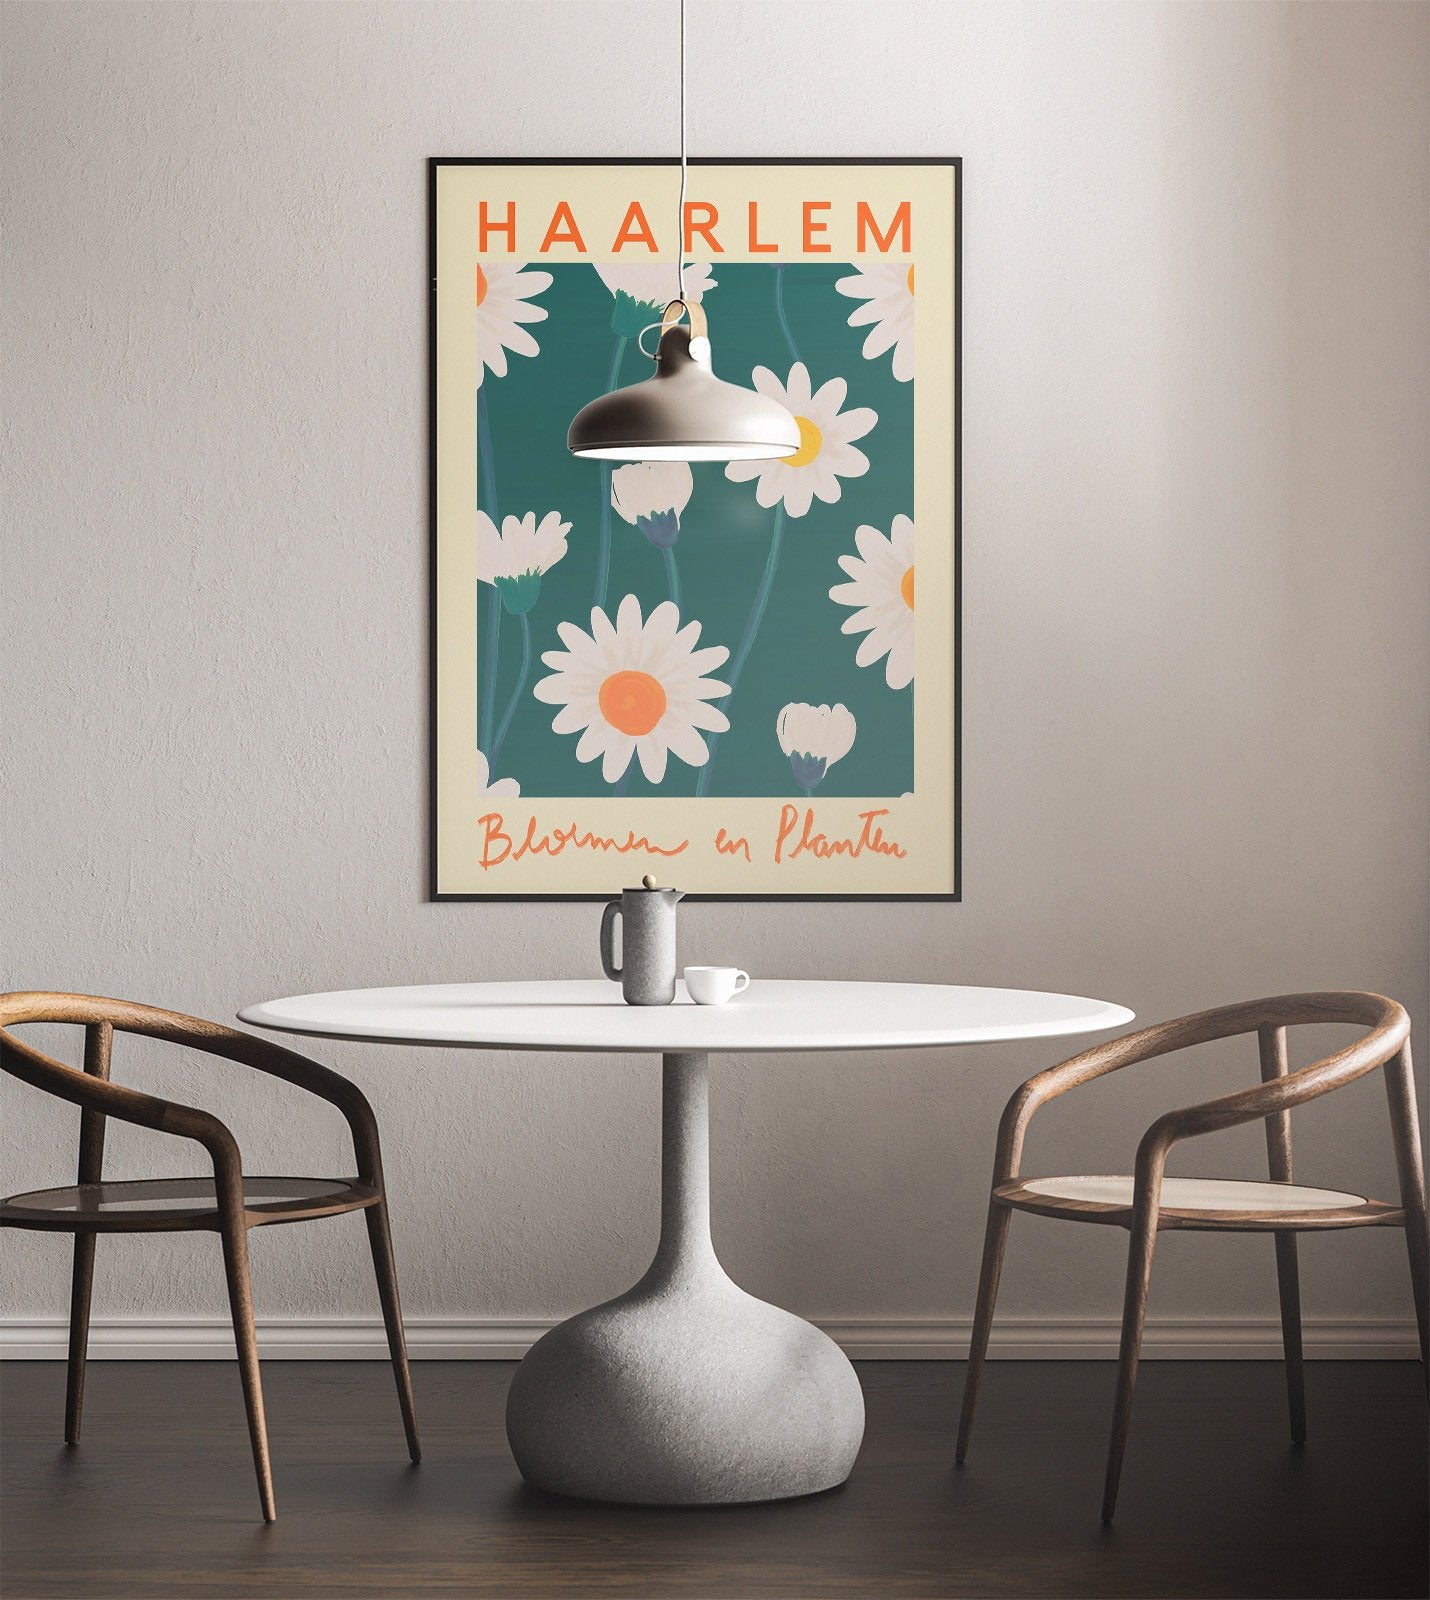 Haarlem Flower Market Poster